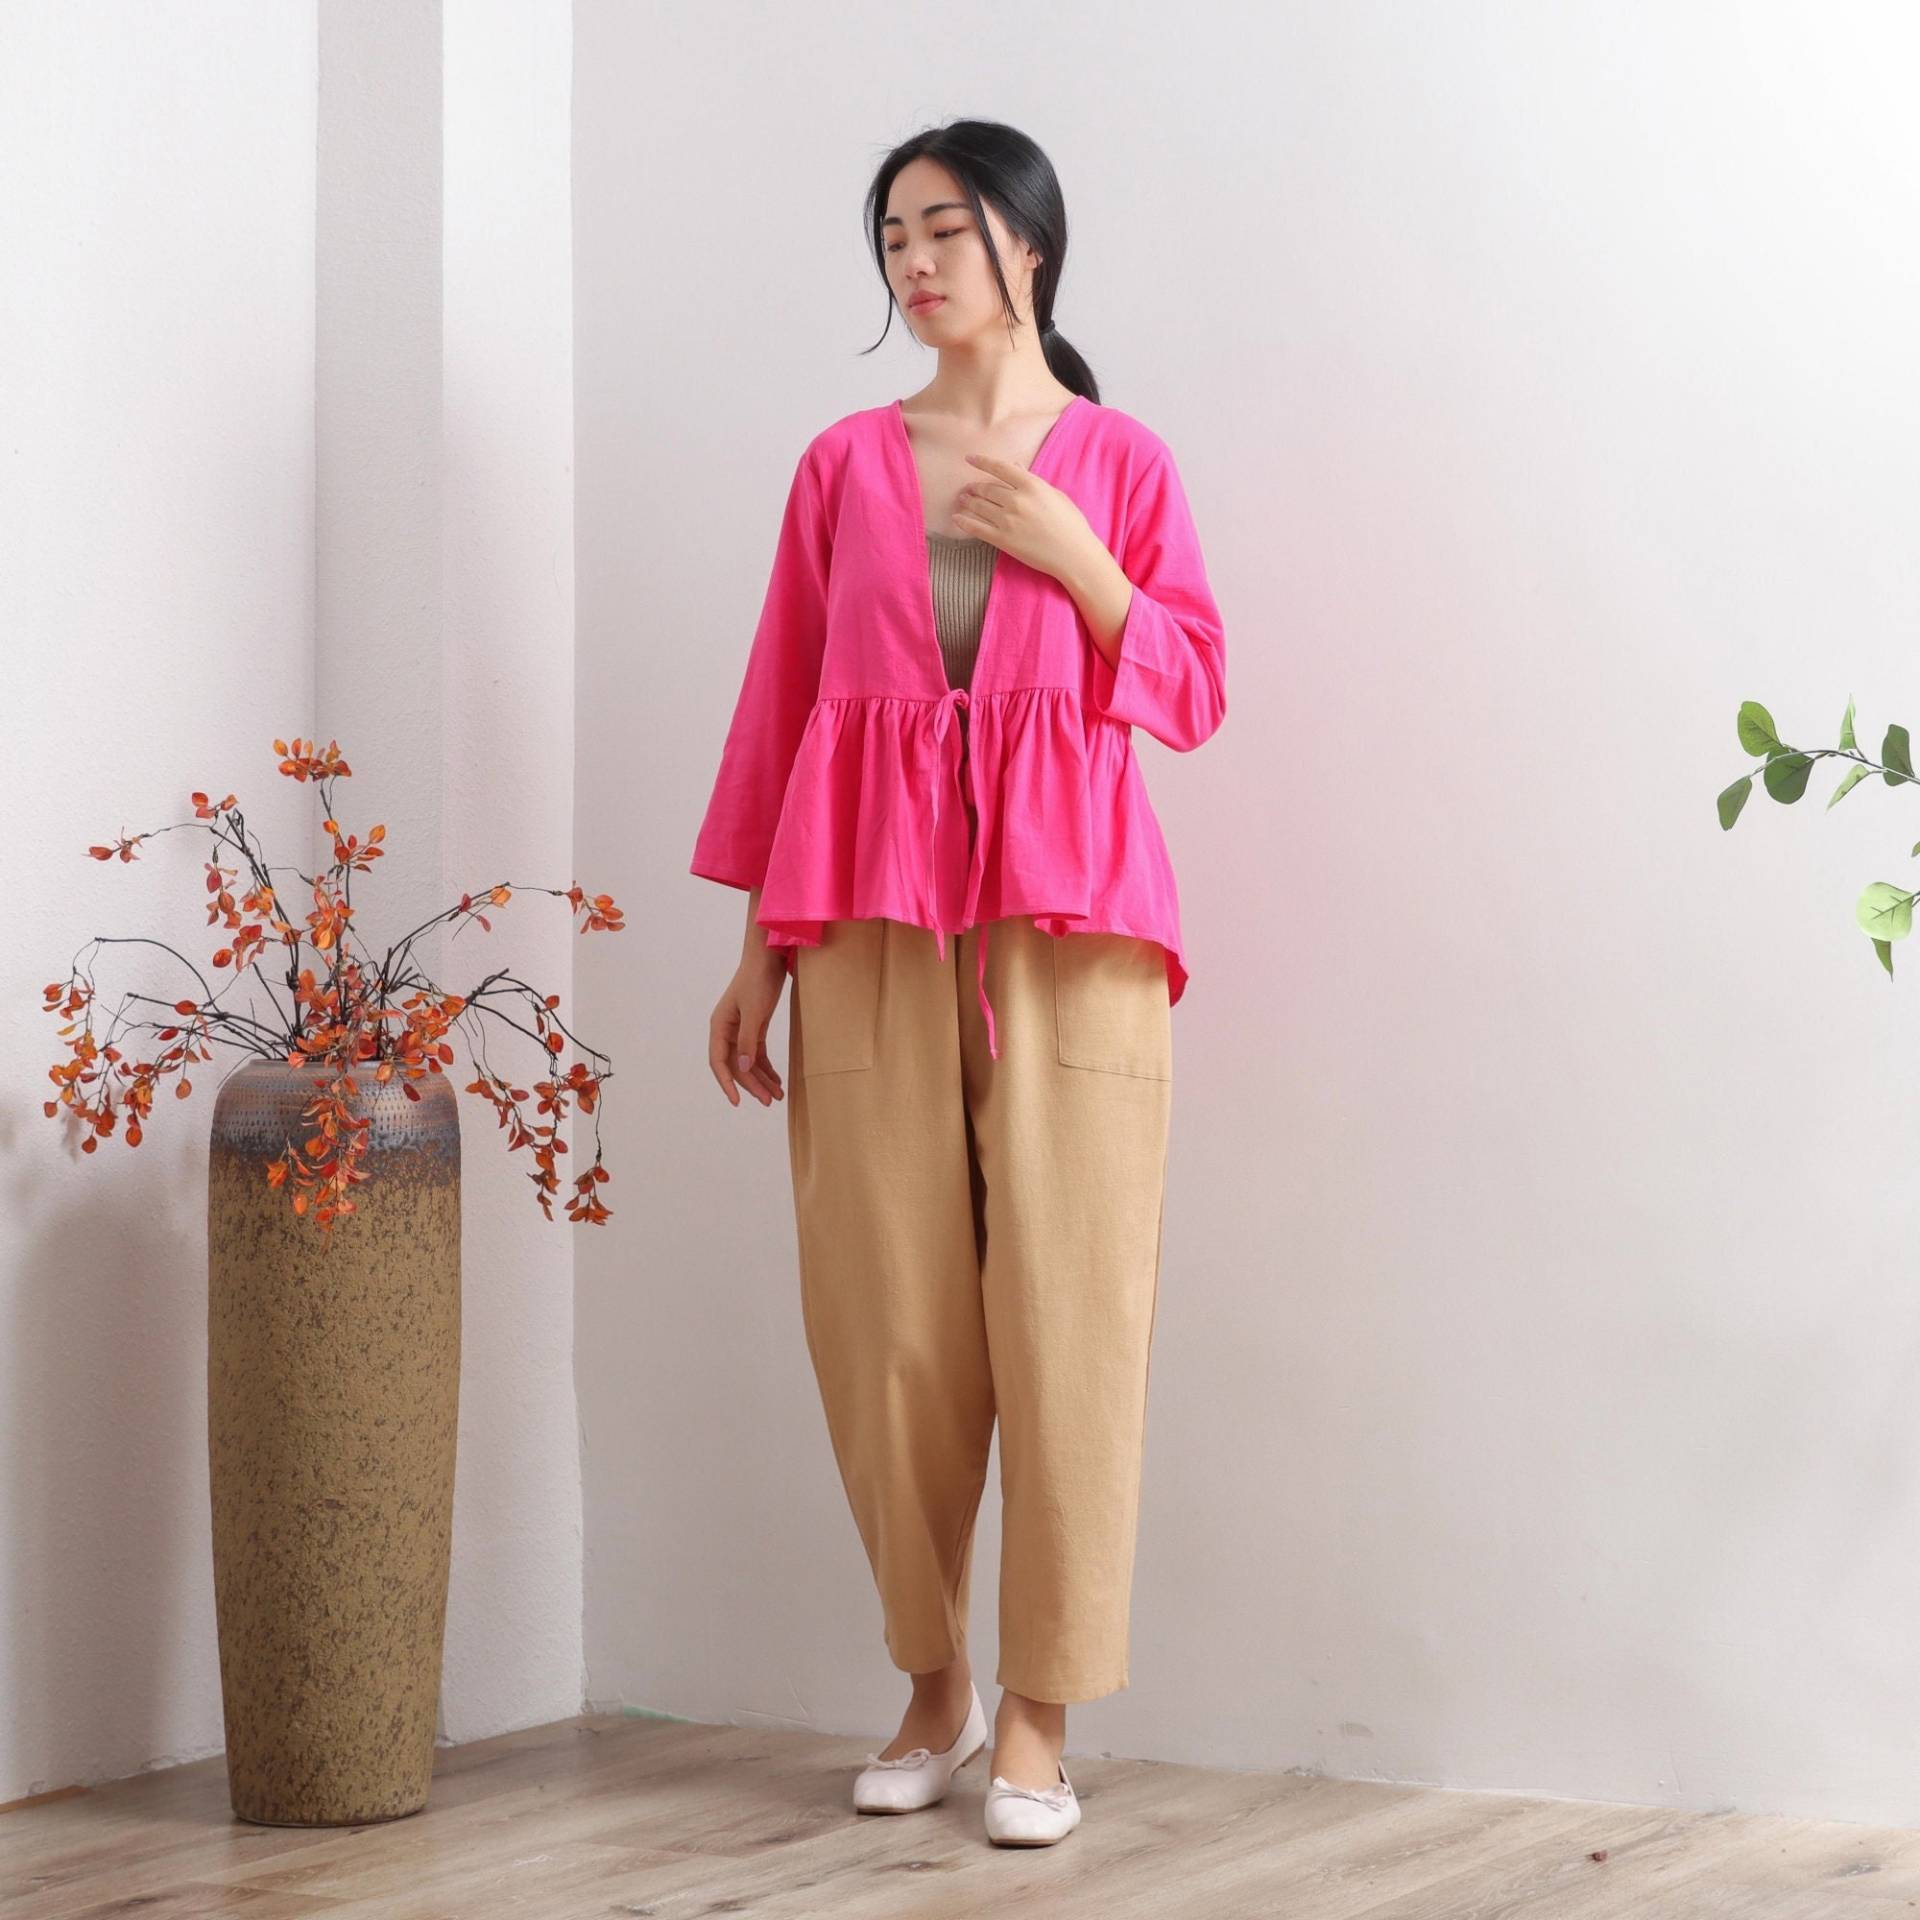 Baumwolle Kurzmantel Damen Tops Cardigan Long Sleeves Bluse Casual Loose Kimono Personalisiertes Shirt Top Plus Size Kleidung Leinen von CharmWoodSigns